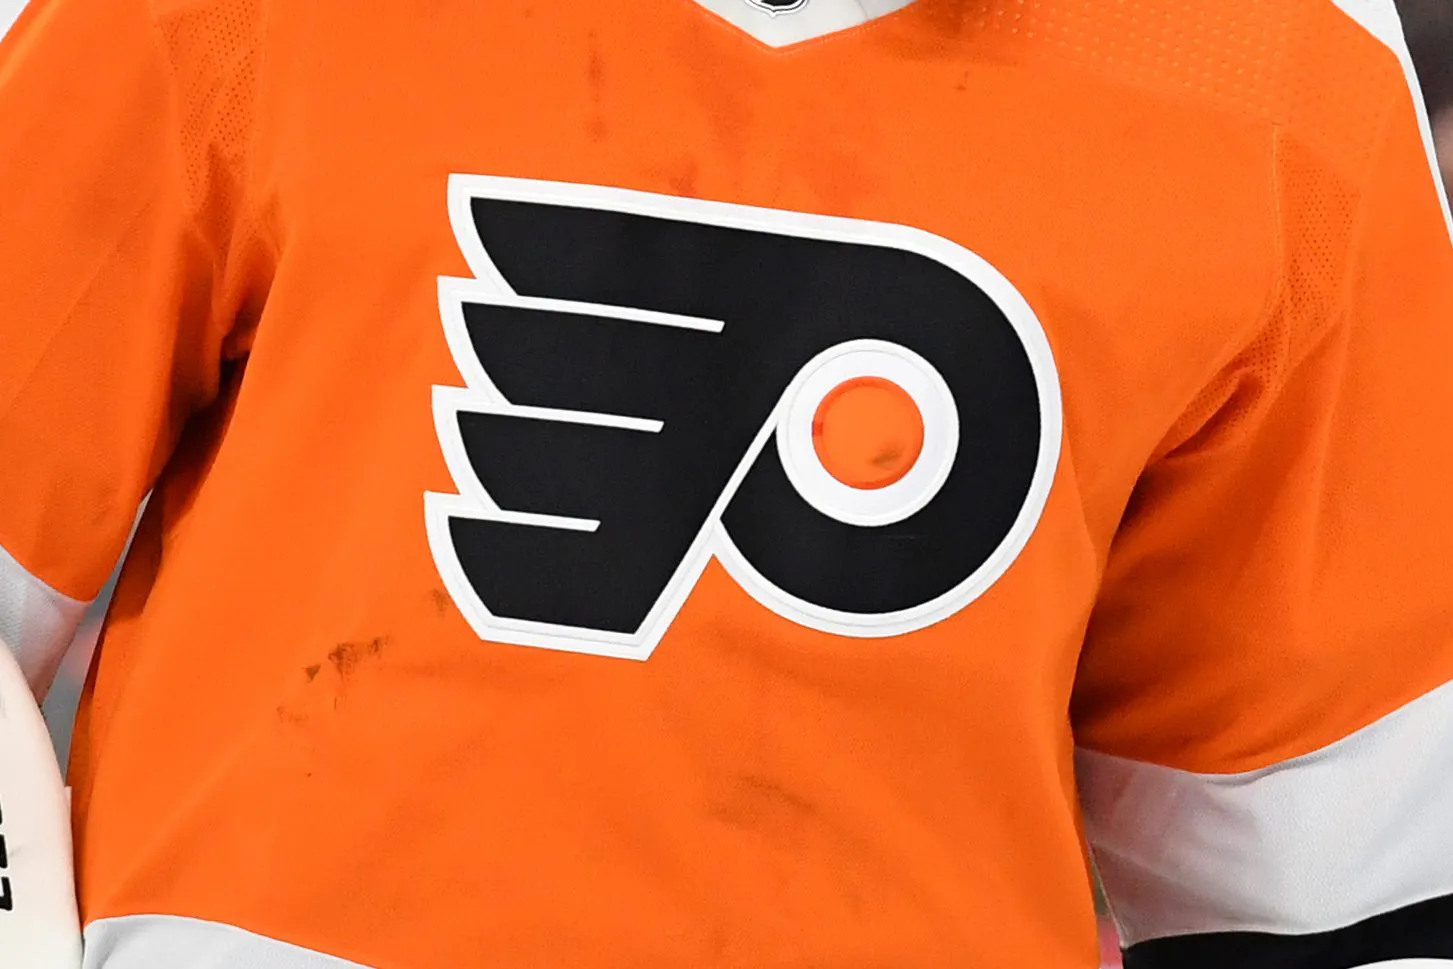 Philadelphia Flyers unveil new arena upgrades costing $400 million